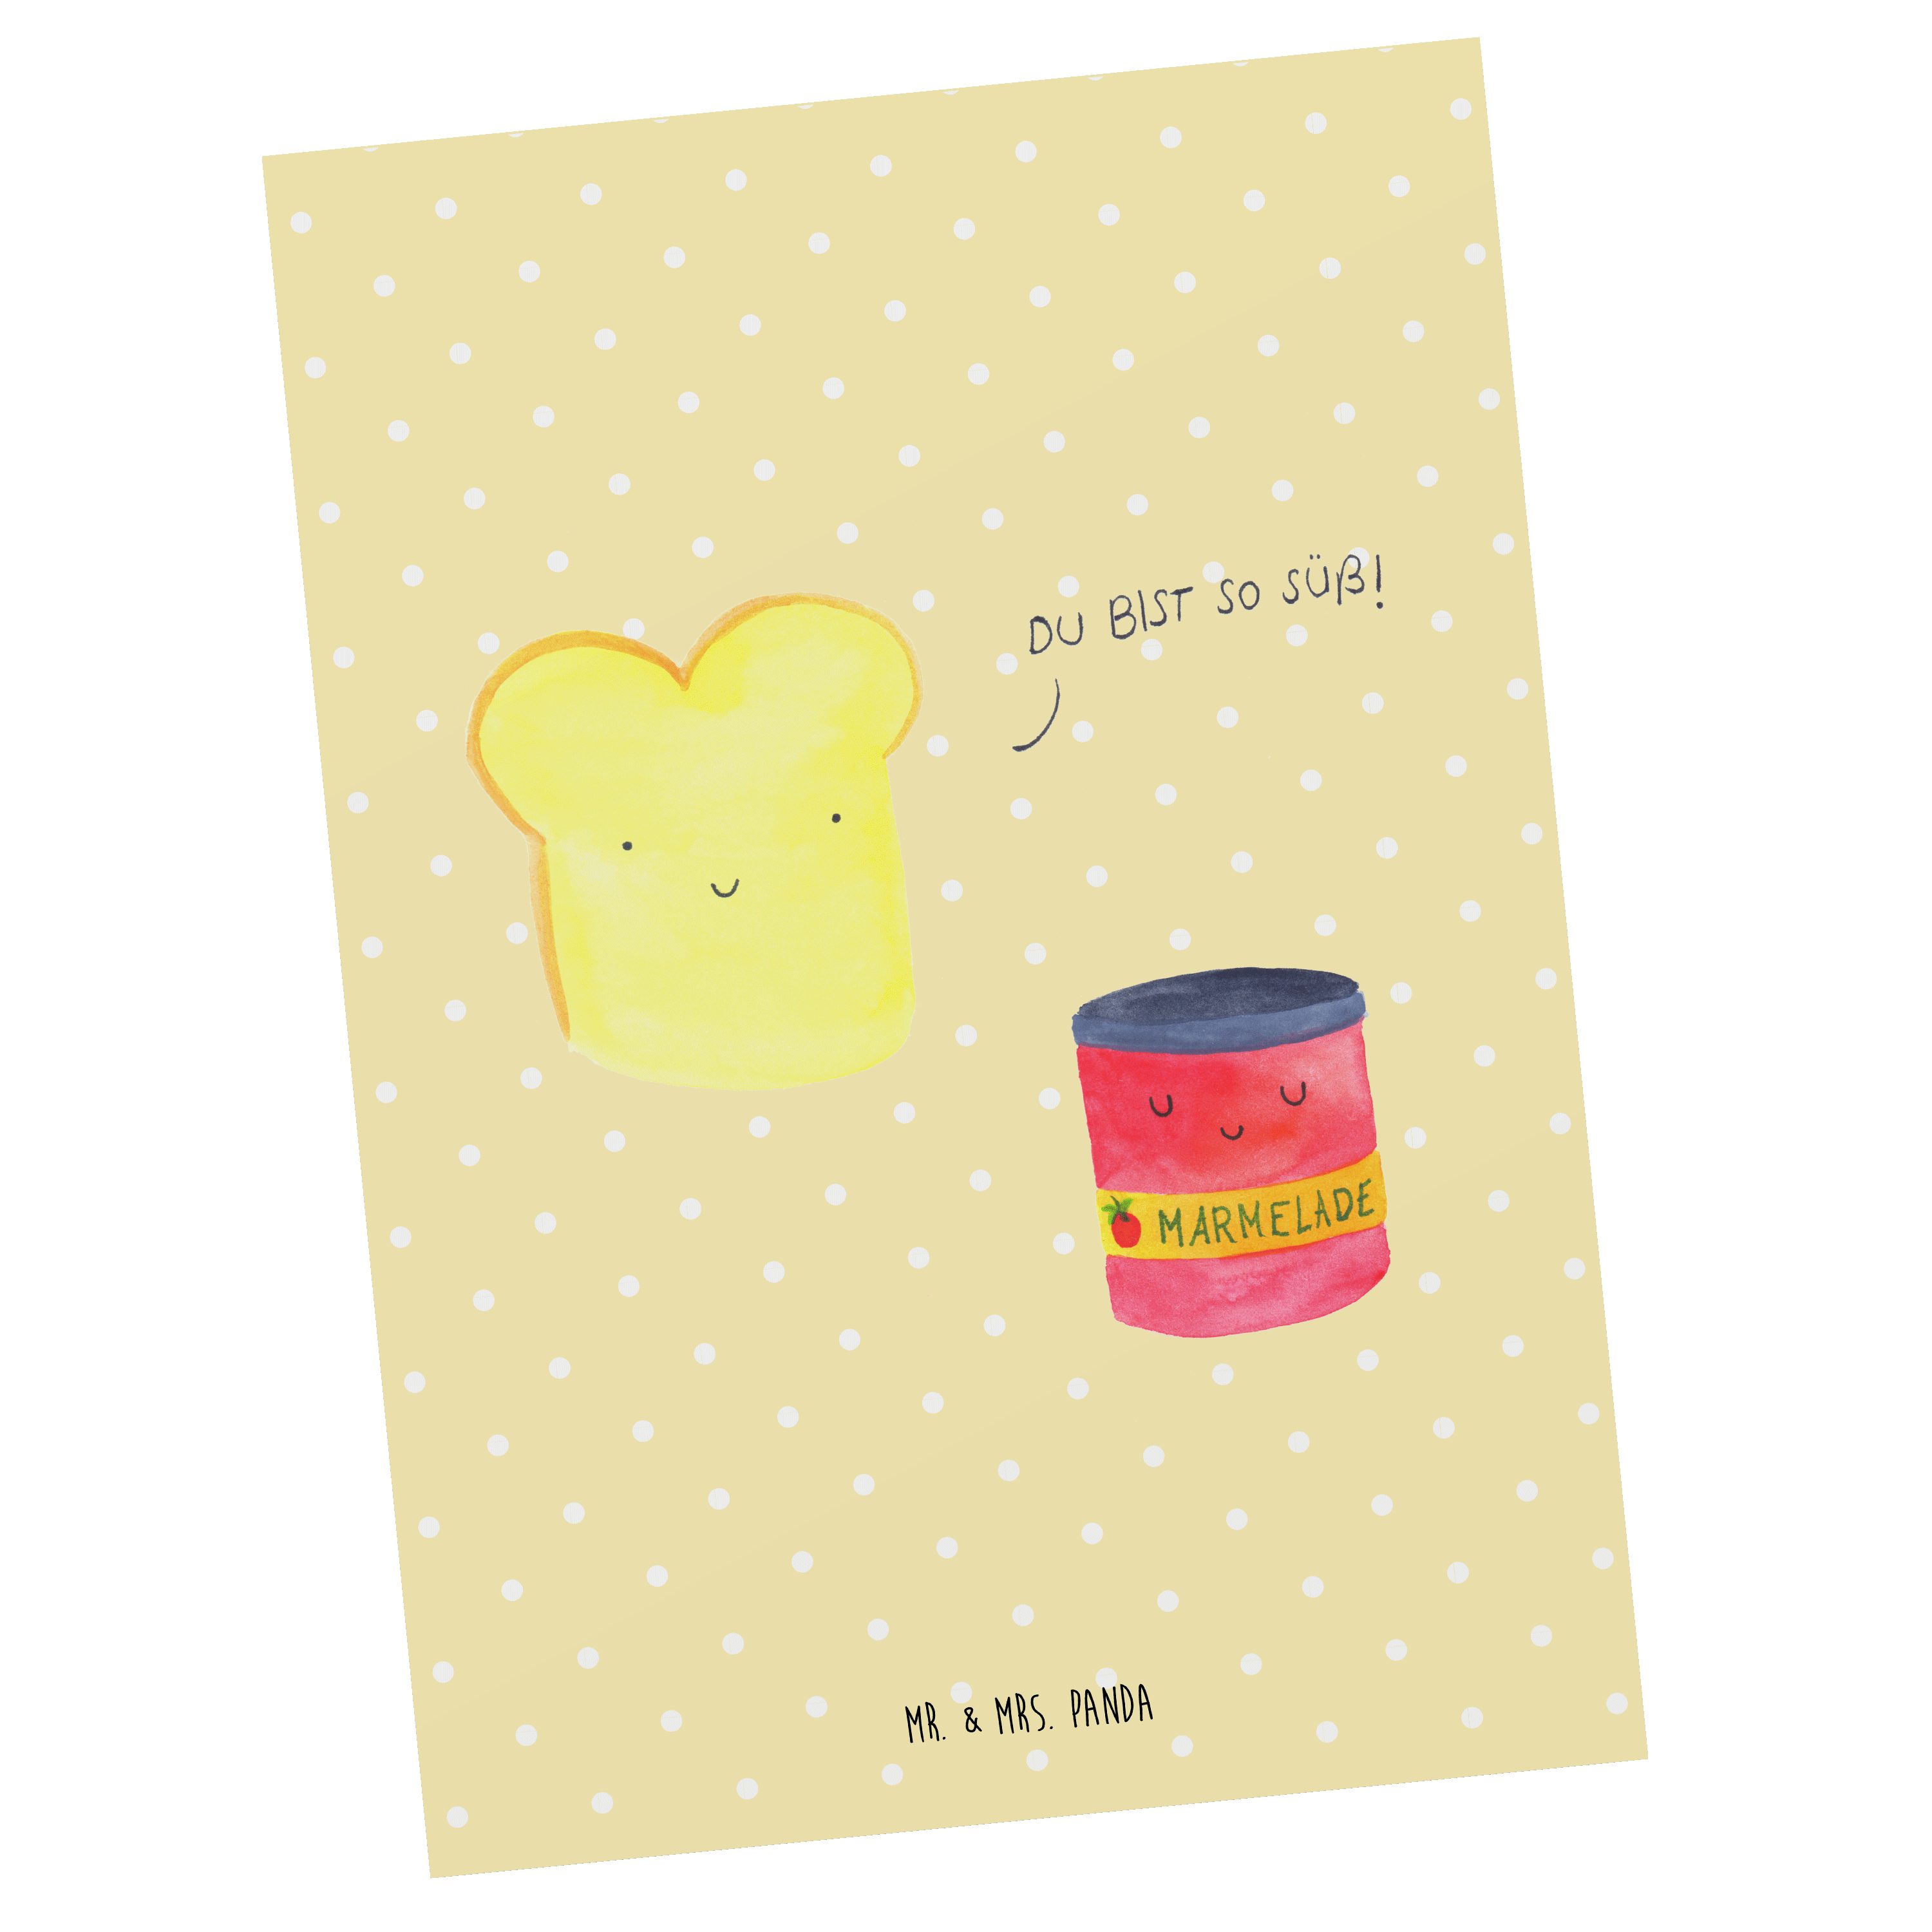 Mr. & Mrs. Panda Postkarte Toast & Marmelade - Gelb Pastell - Geschenk, Geburtstagskarte, Grußka